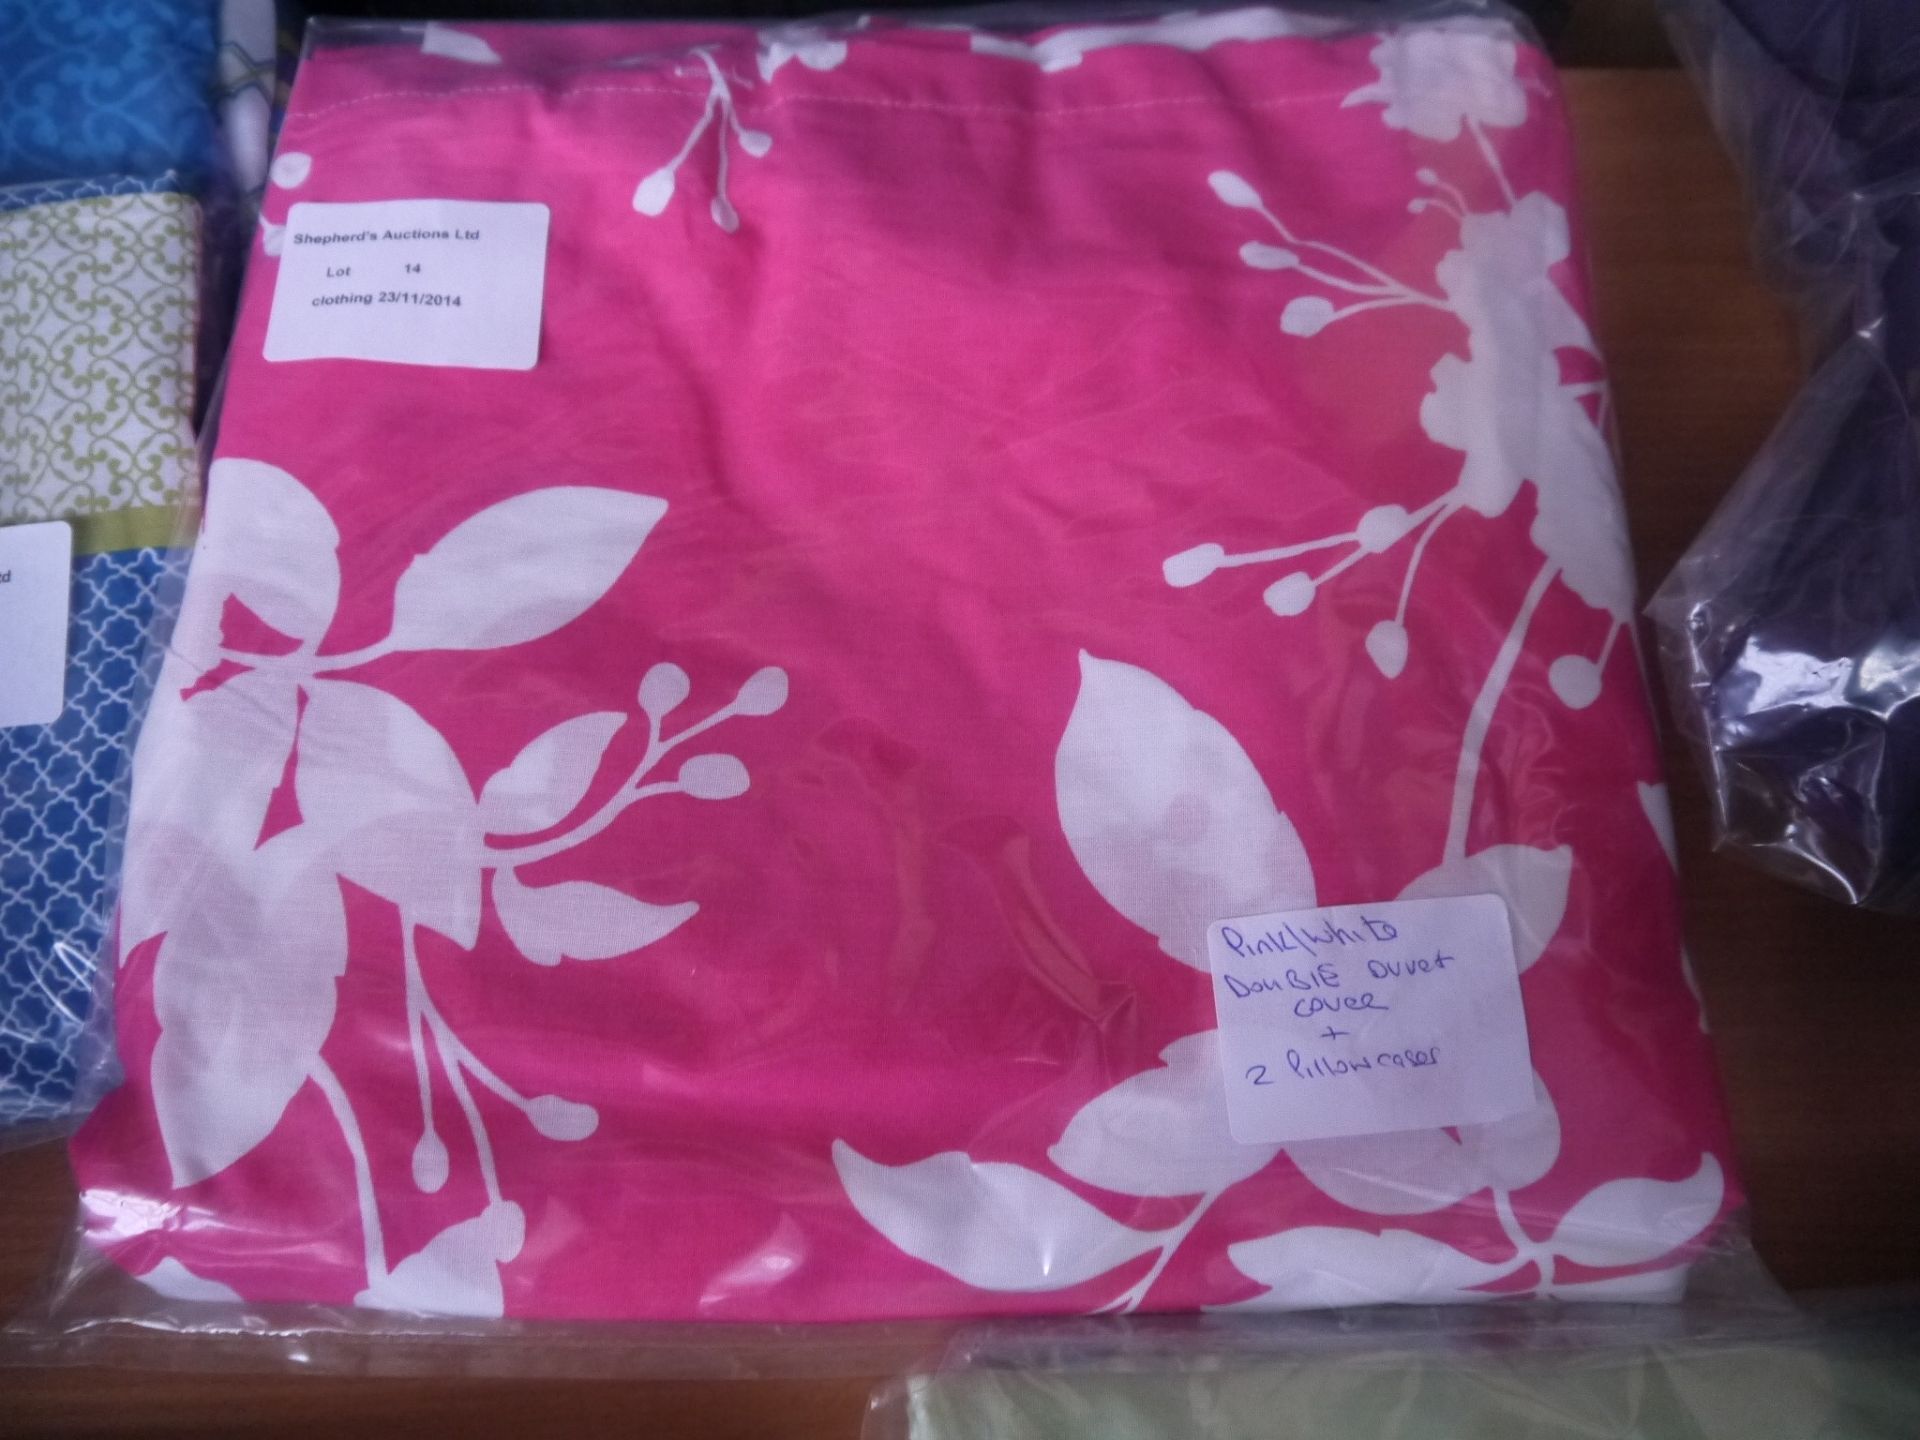 Double duvet cover 2 pillowcases pink/white